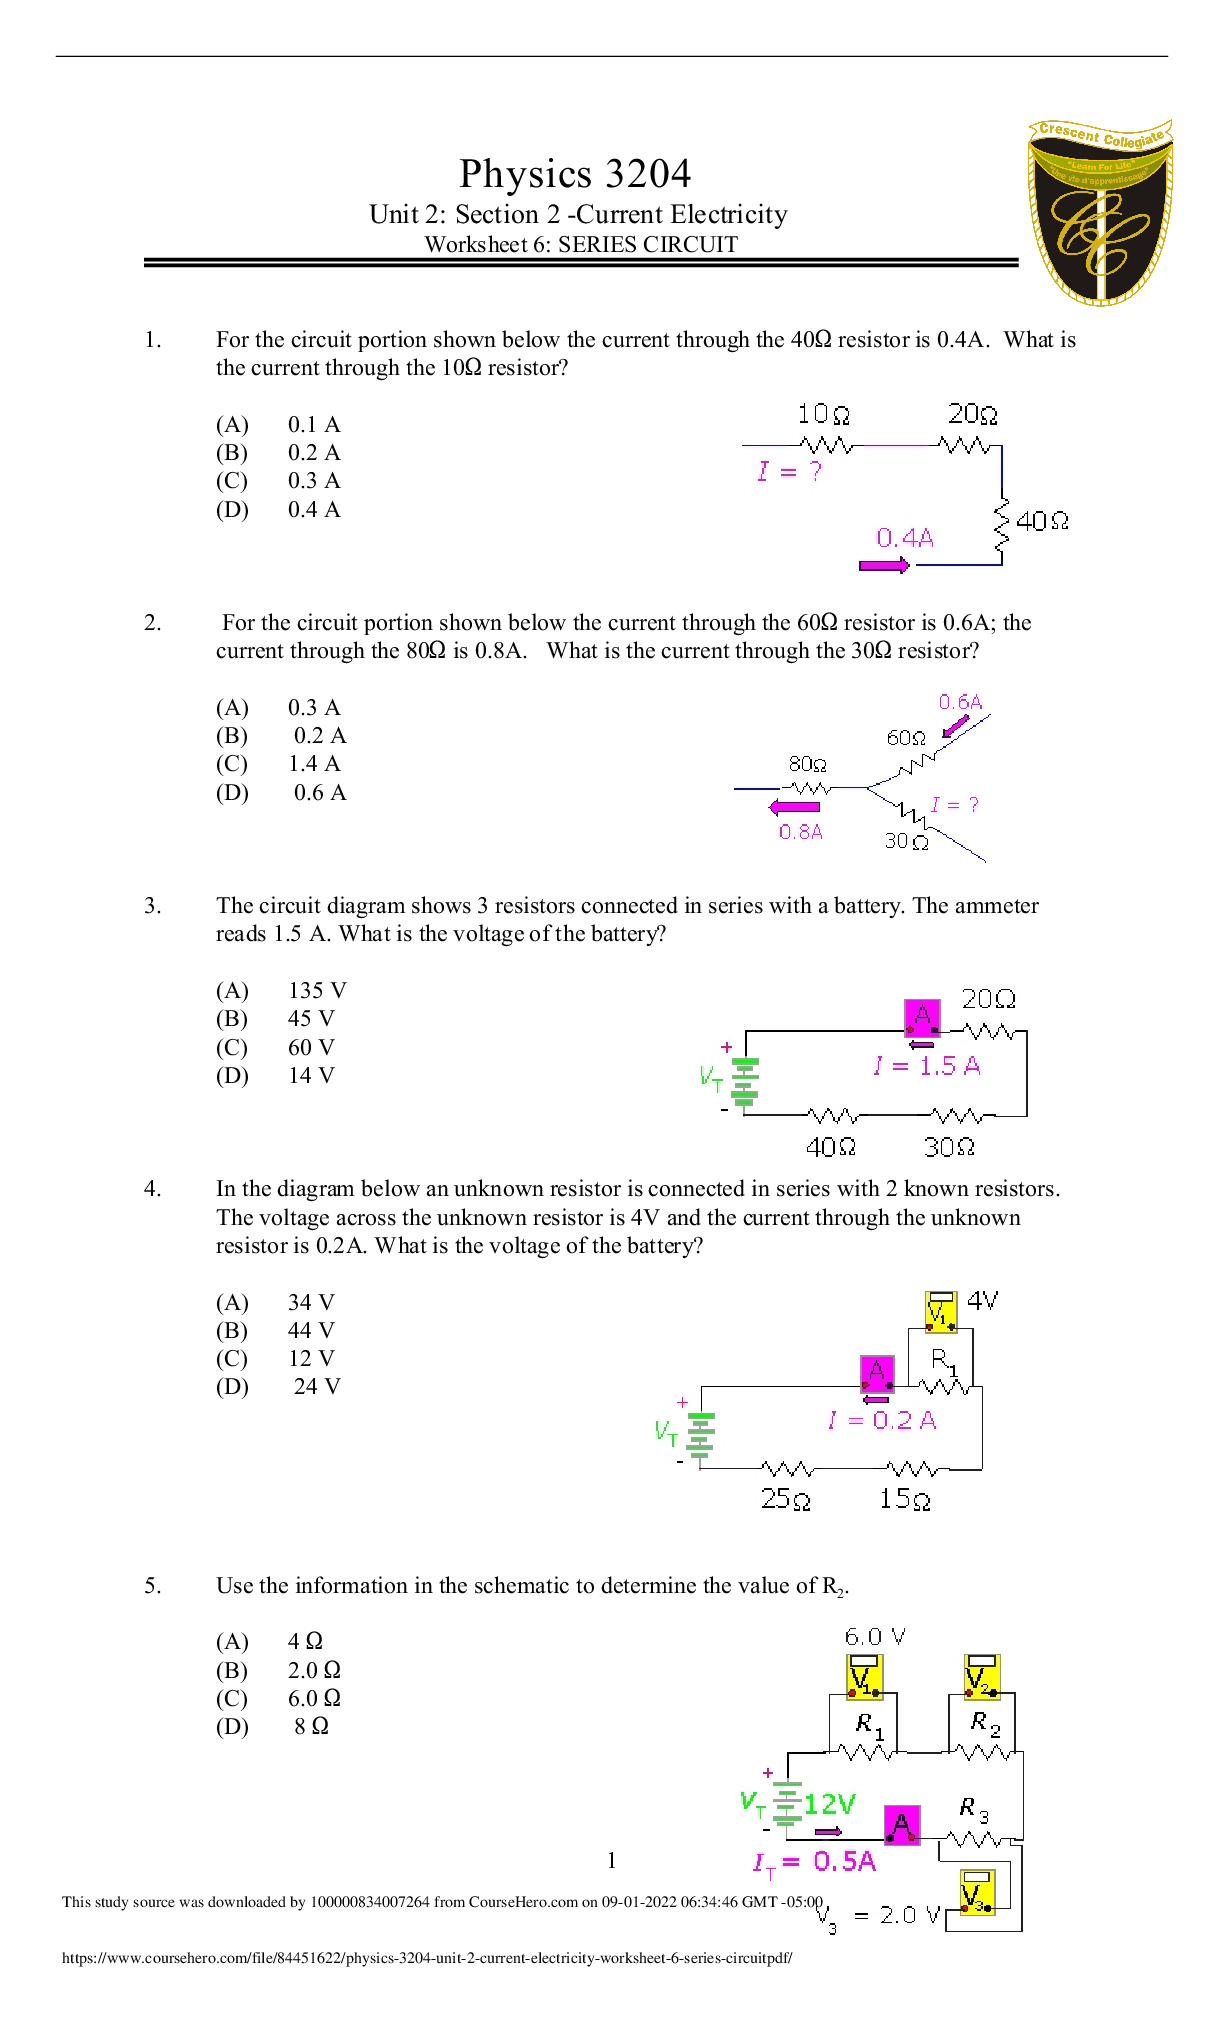 physics_3204_unit_2_current_electricity_worksheet_6_series_circuit.pdf